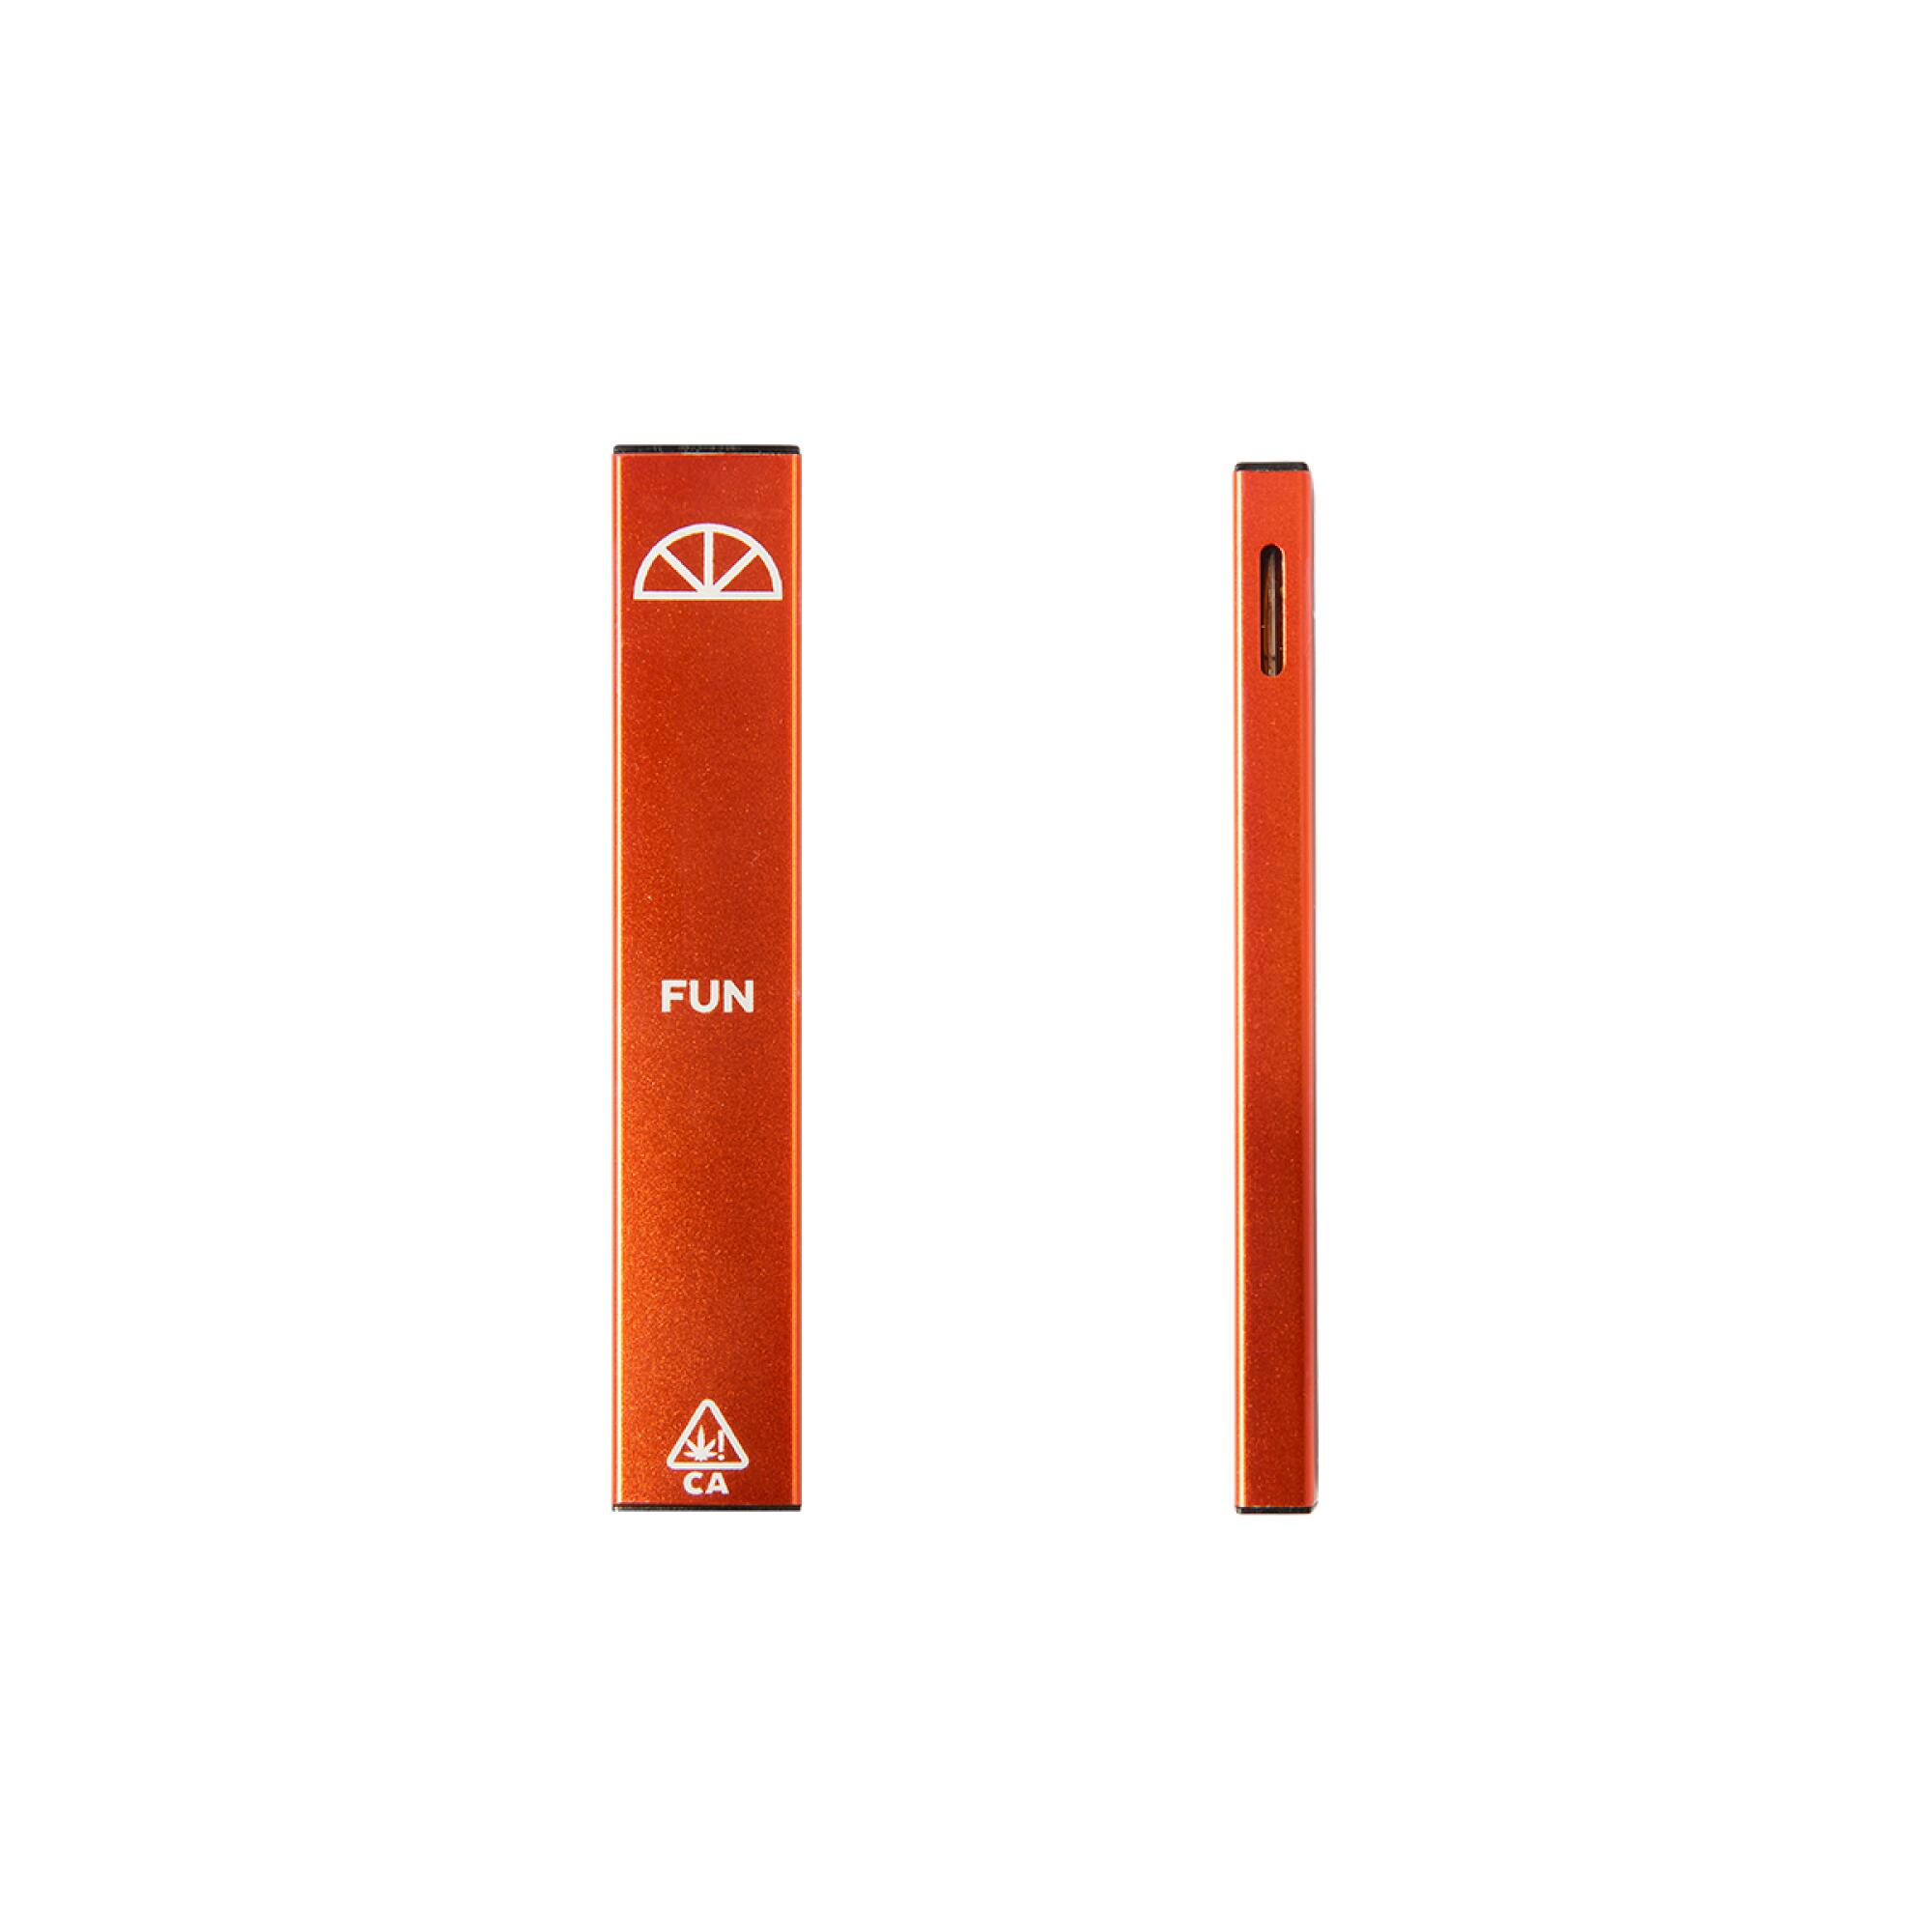 A photo of a thin orange vaporizer pen.